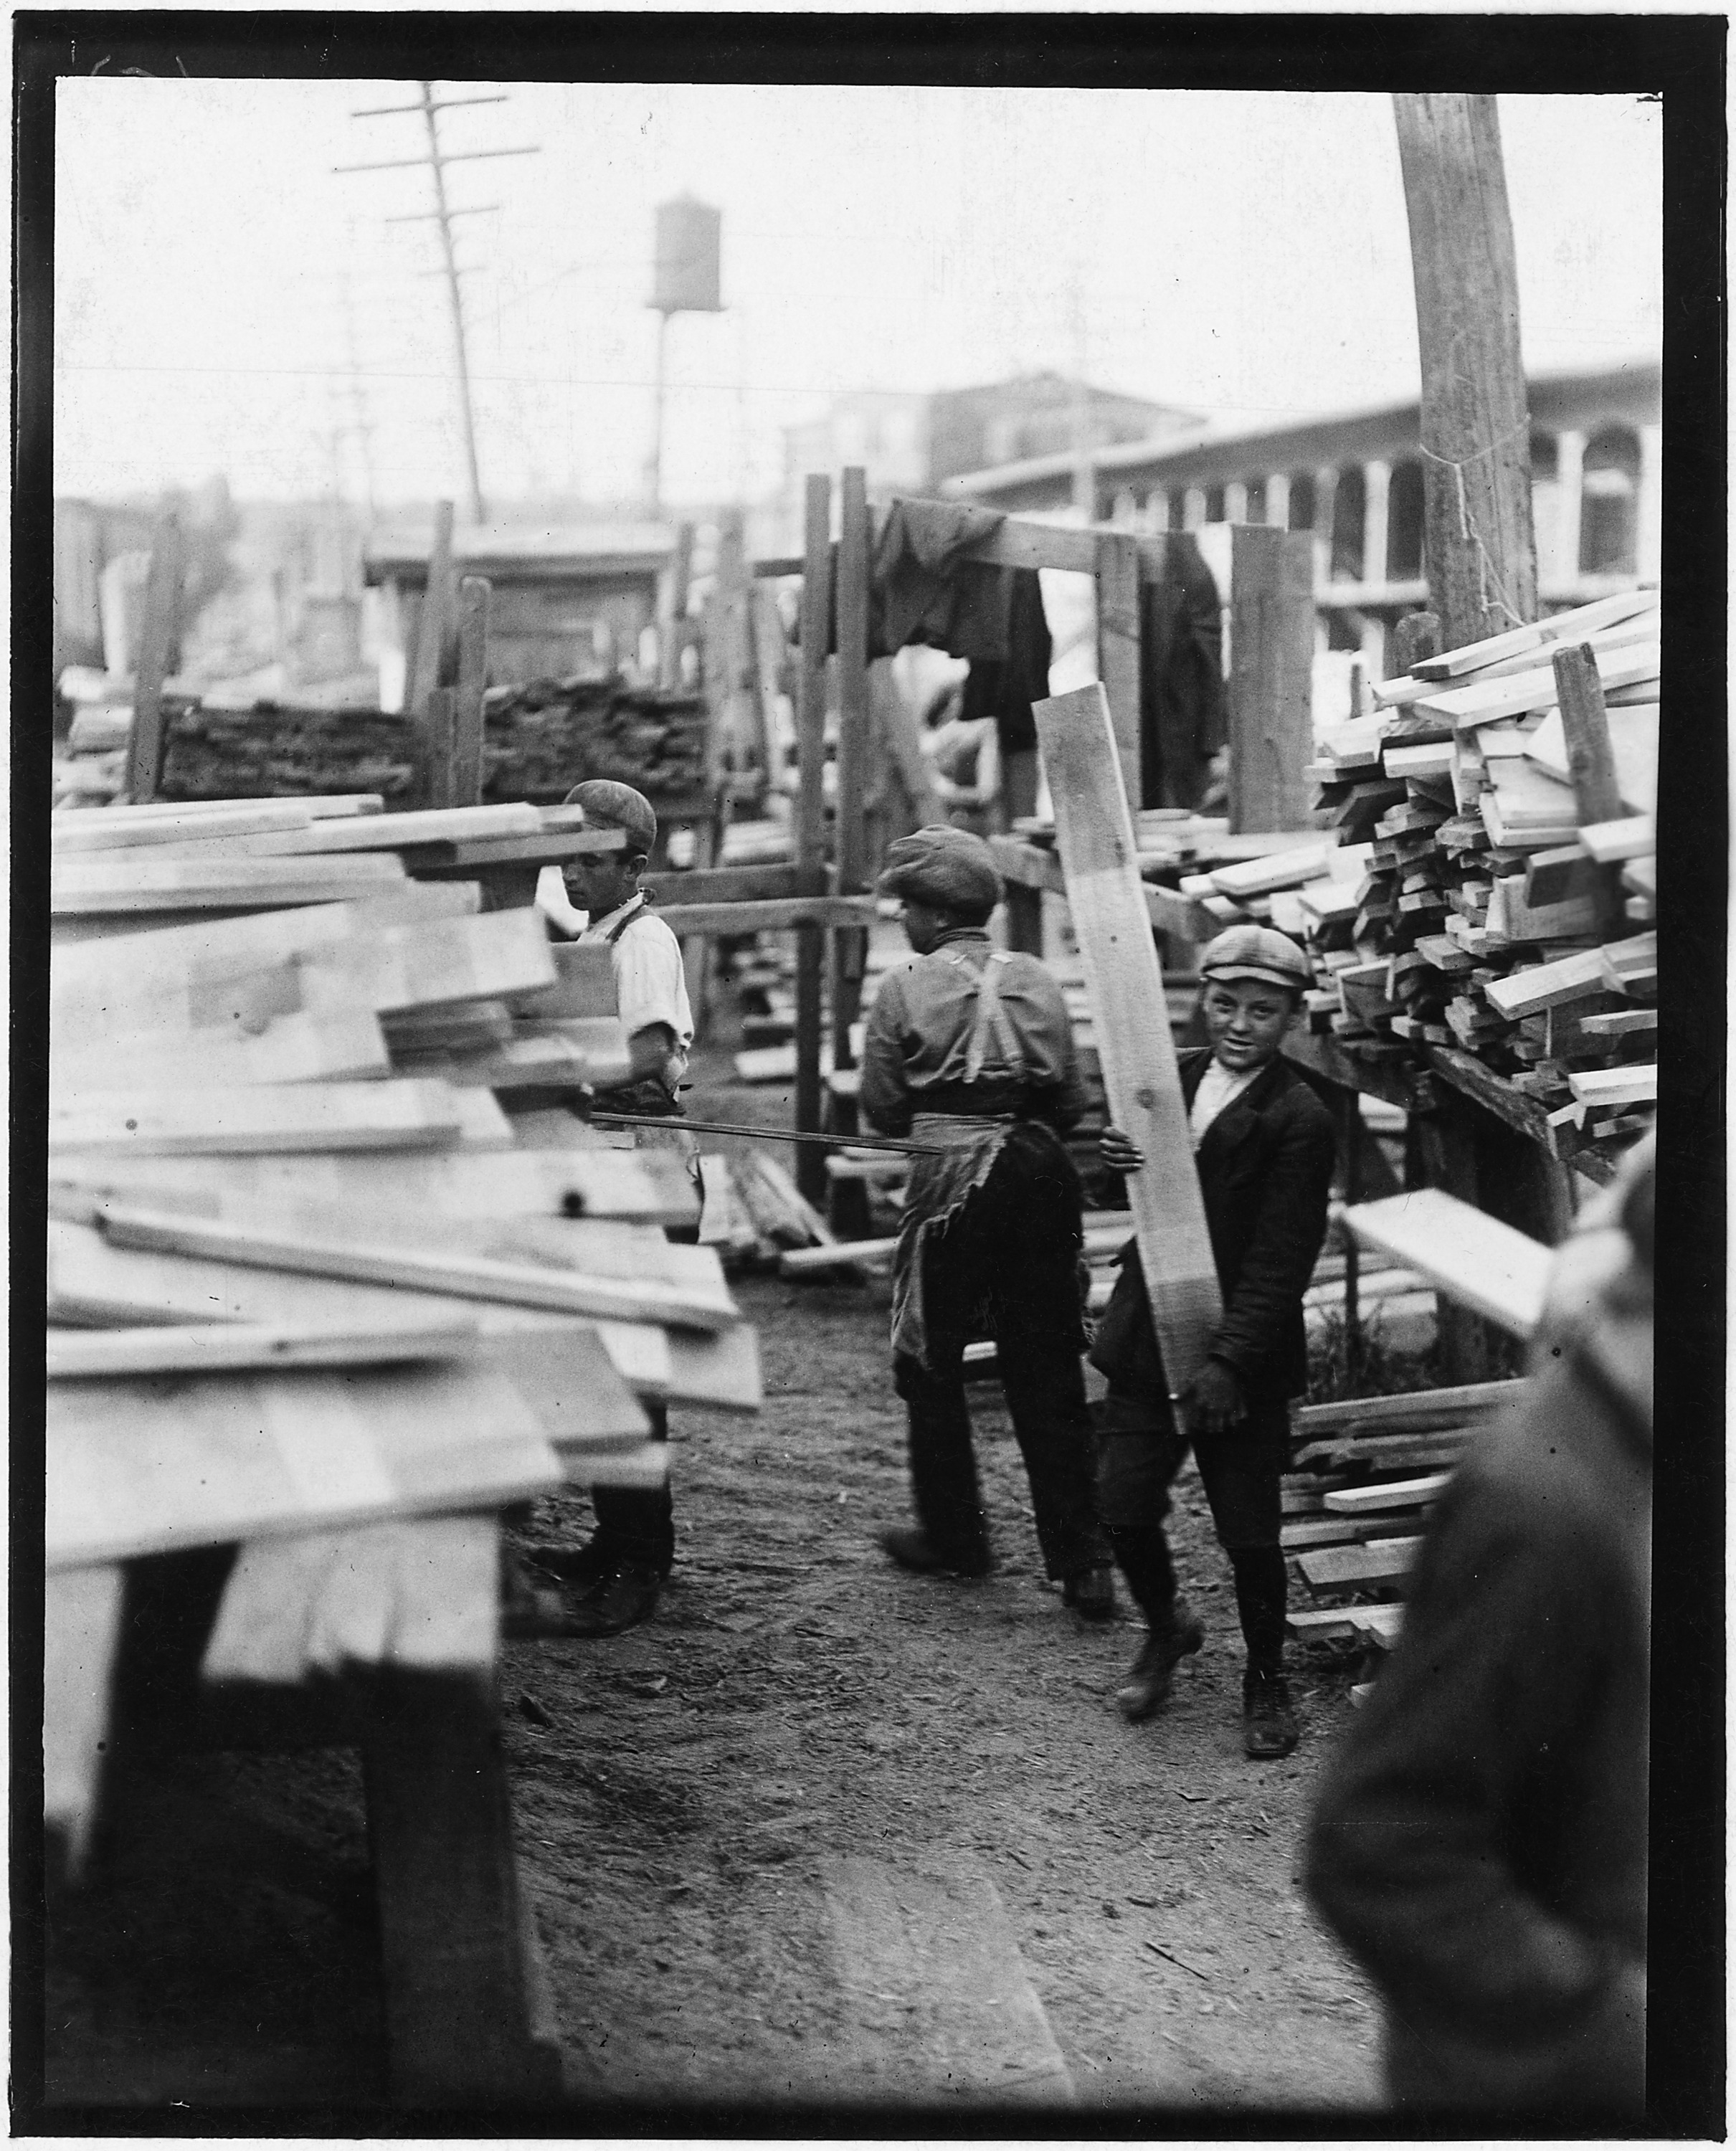 Young boy working for Hickok Lumber Co. Burlington, Vt. - NARA - 523252